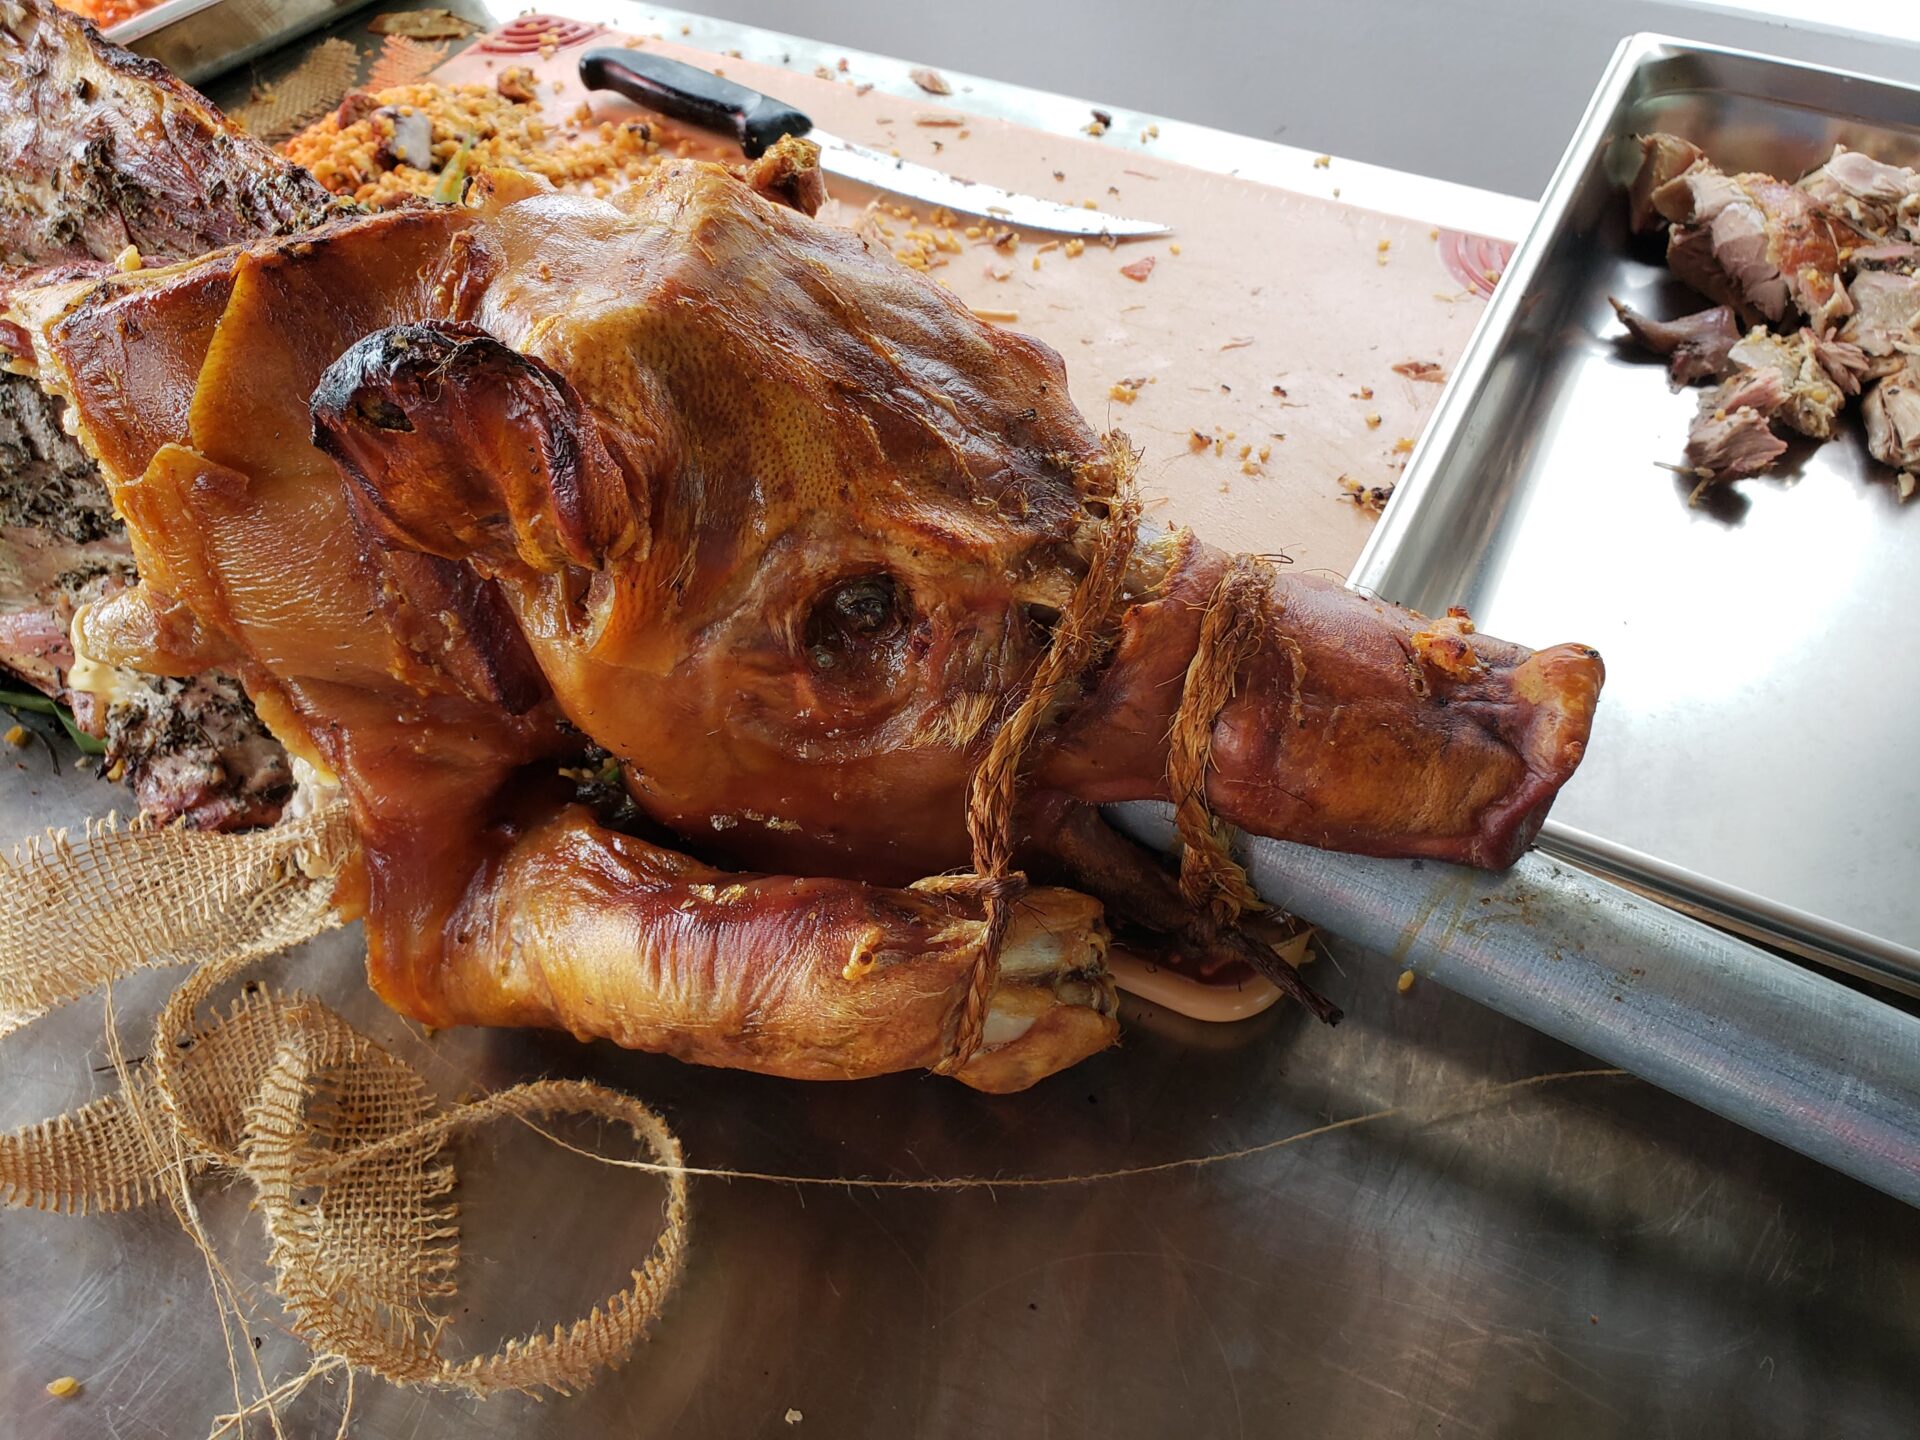 a roasted pig on a metal pole